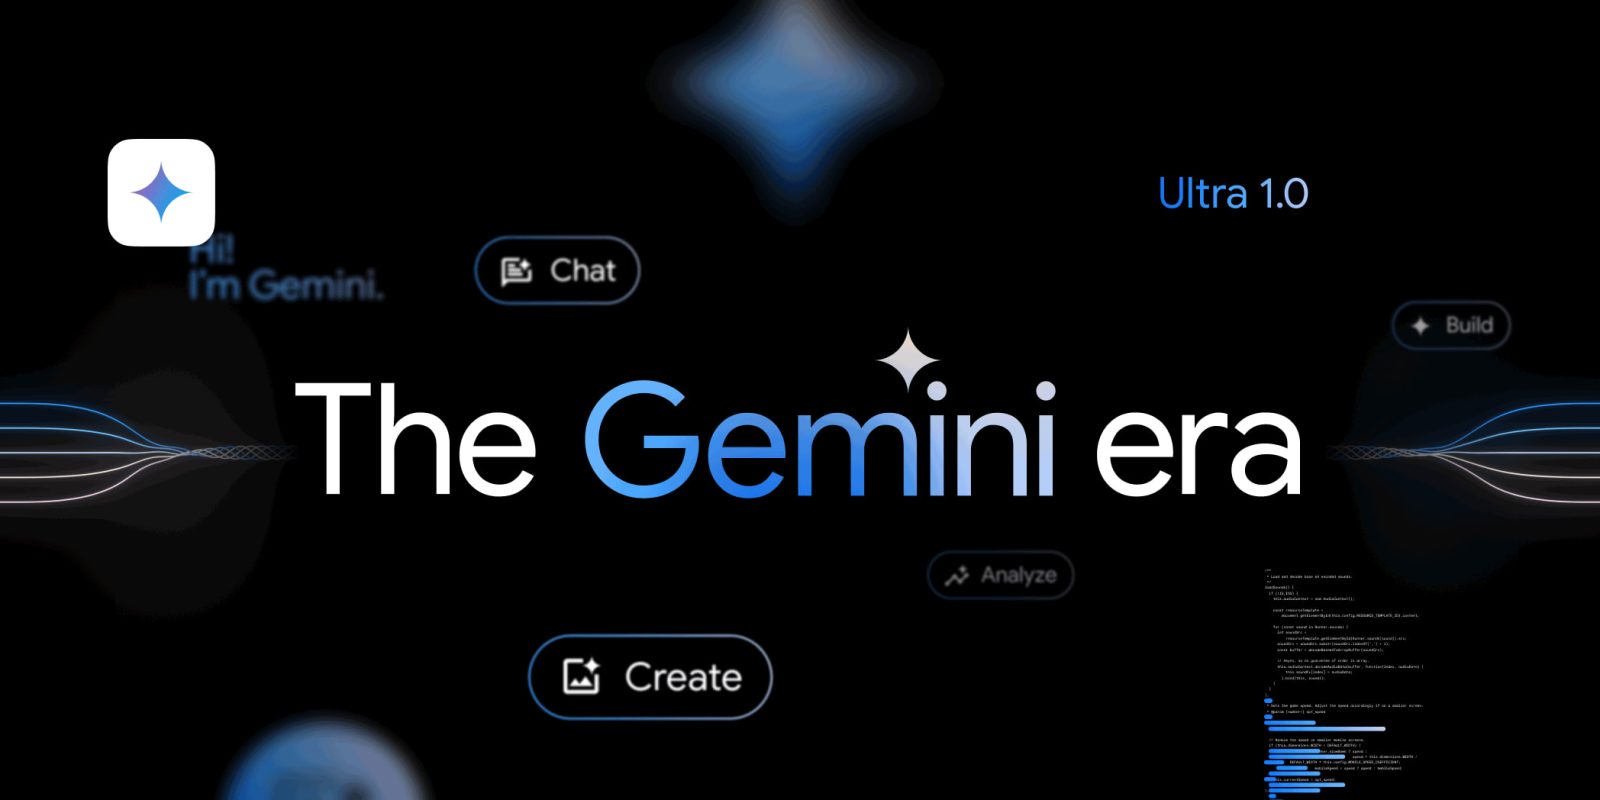 Google explains how ‘Gemini’ got its name